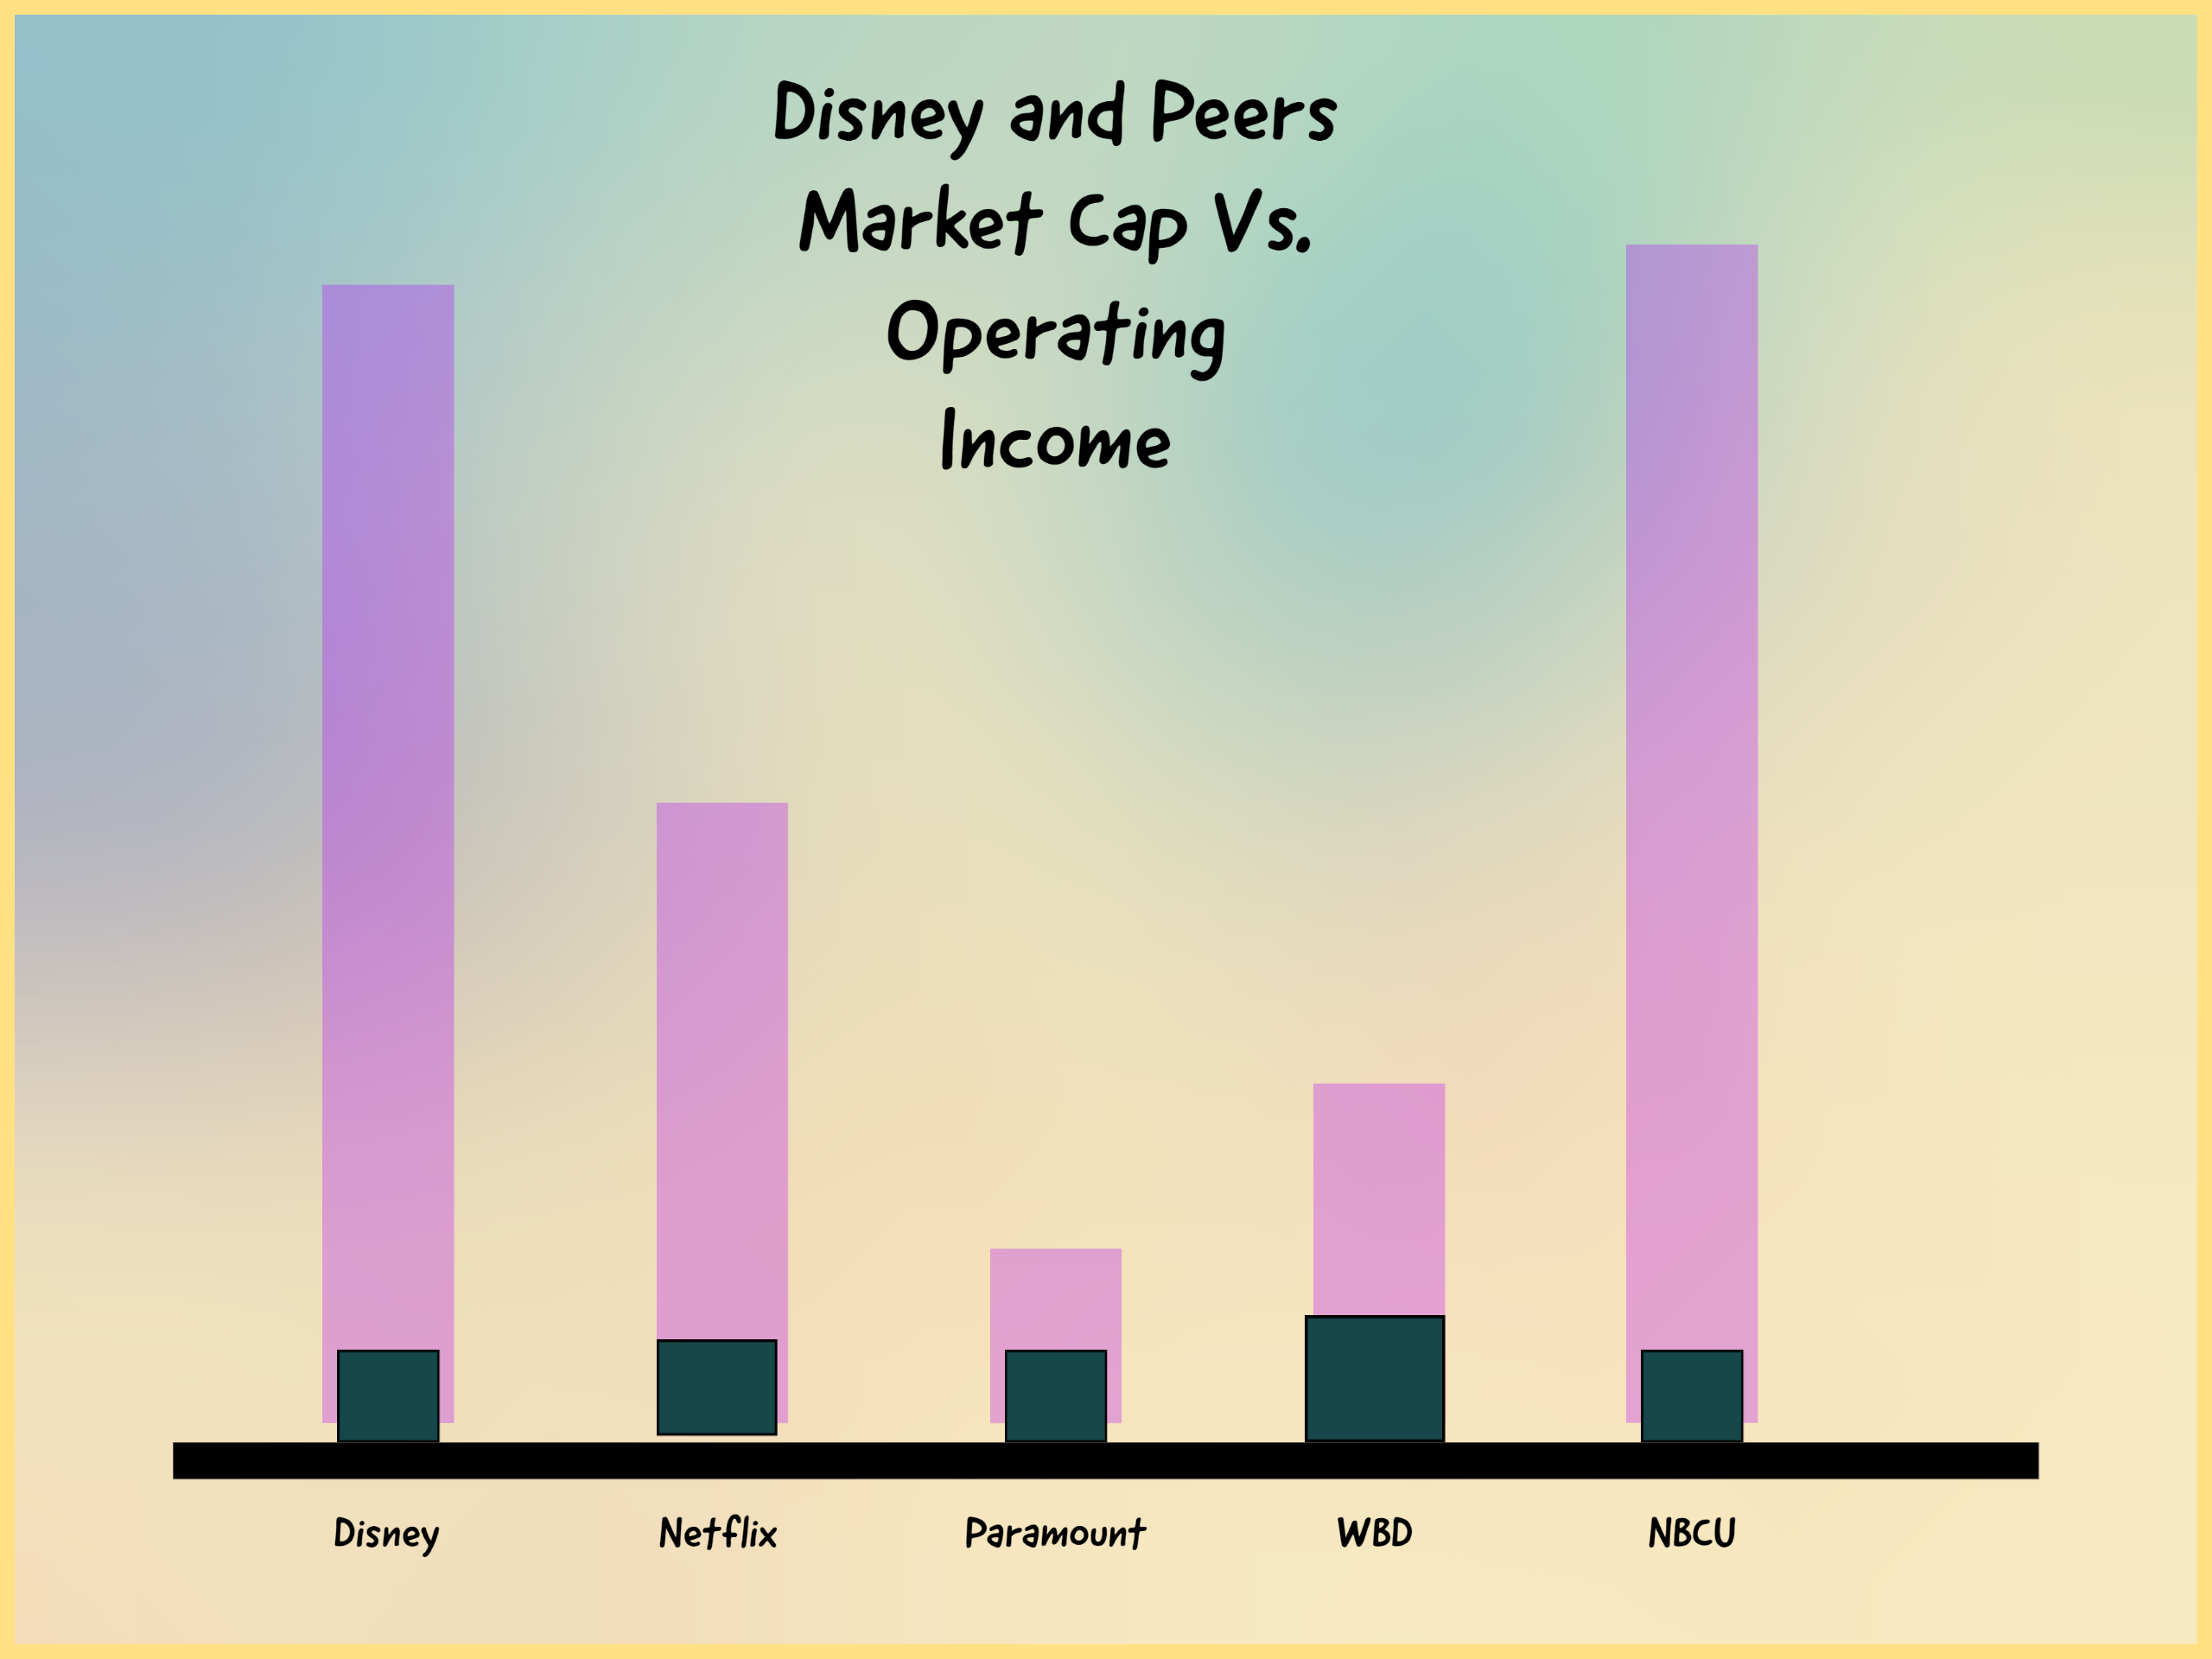 Walt Disney Could Miss Subscriber, Profit Estimates (NYSEDIS